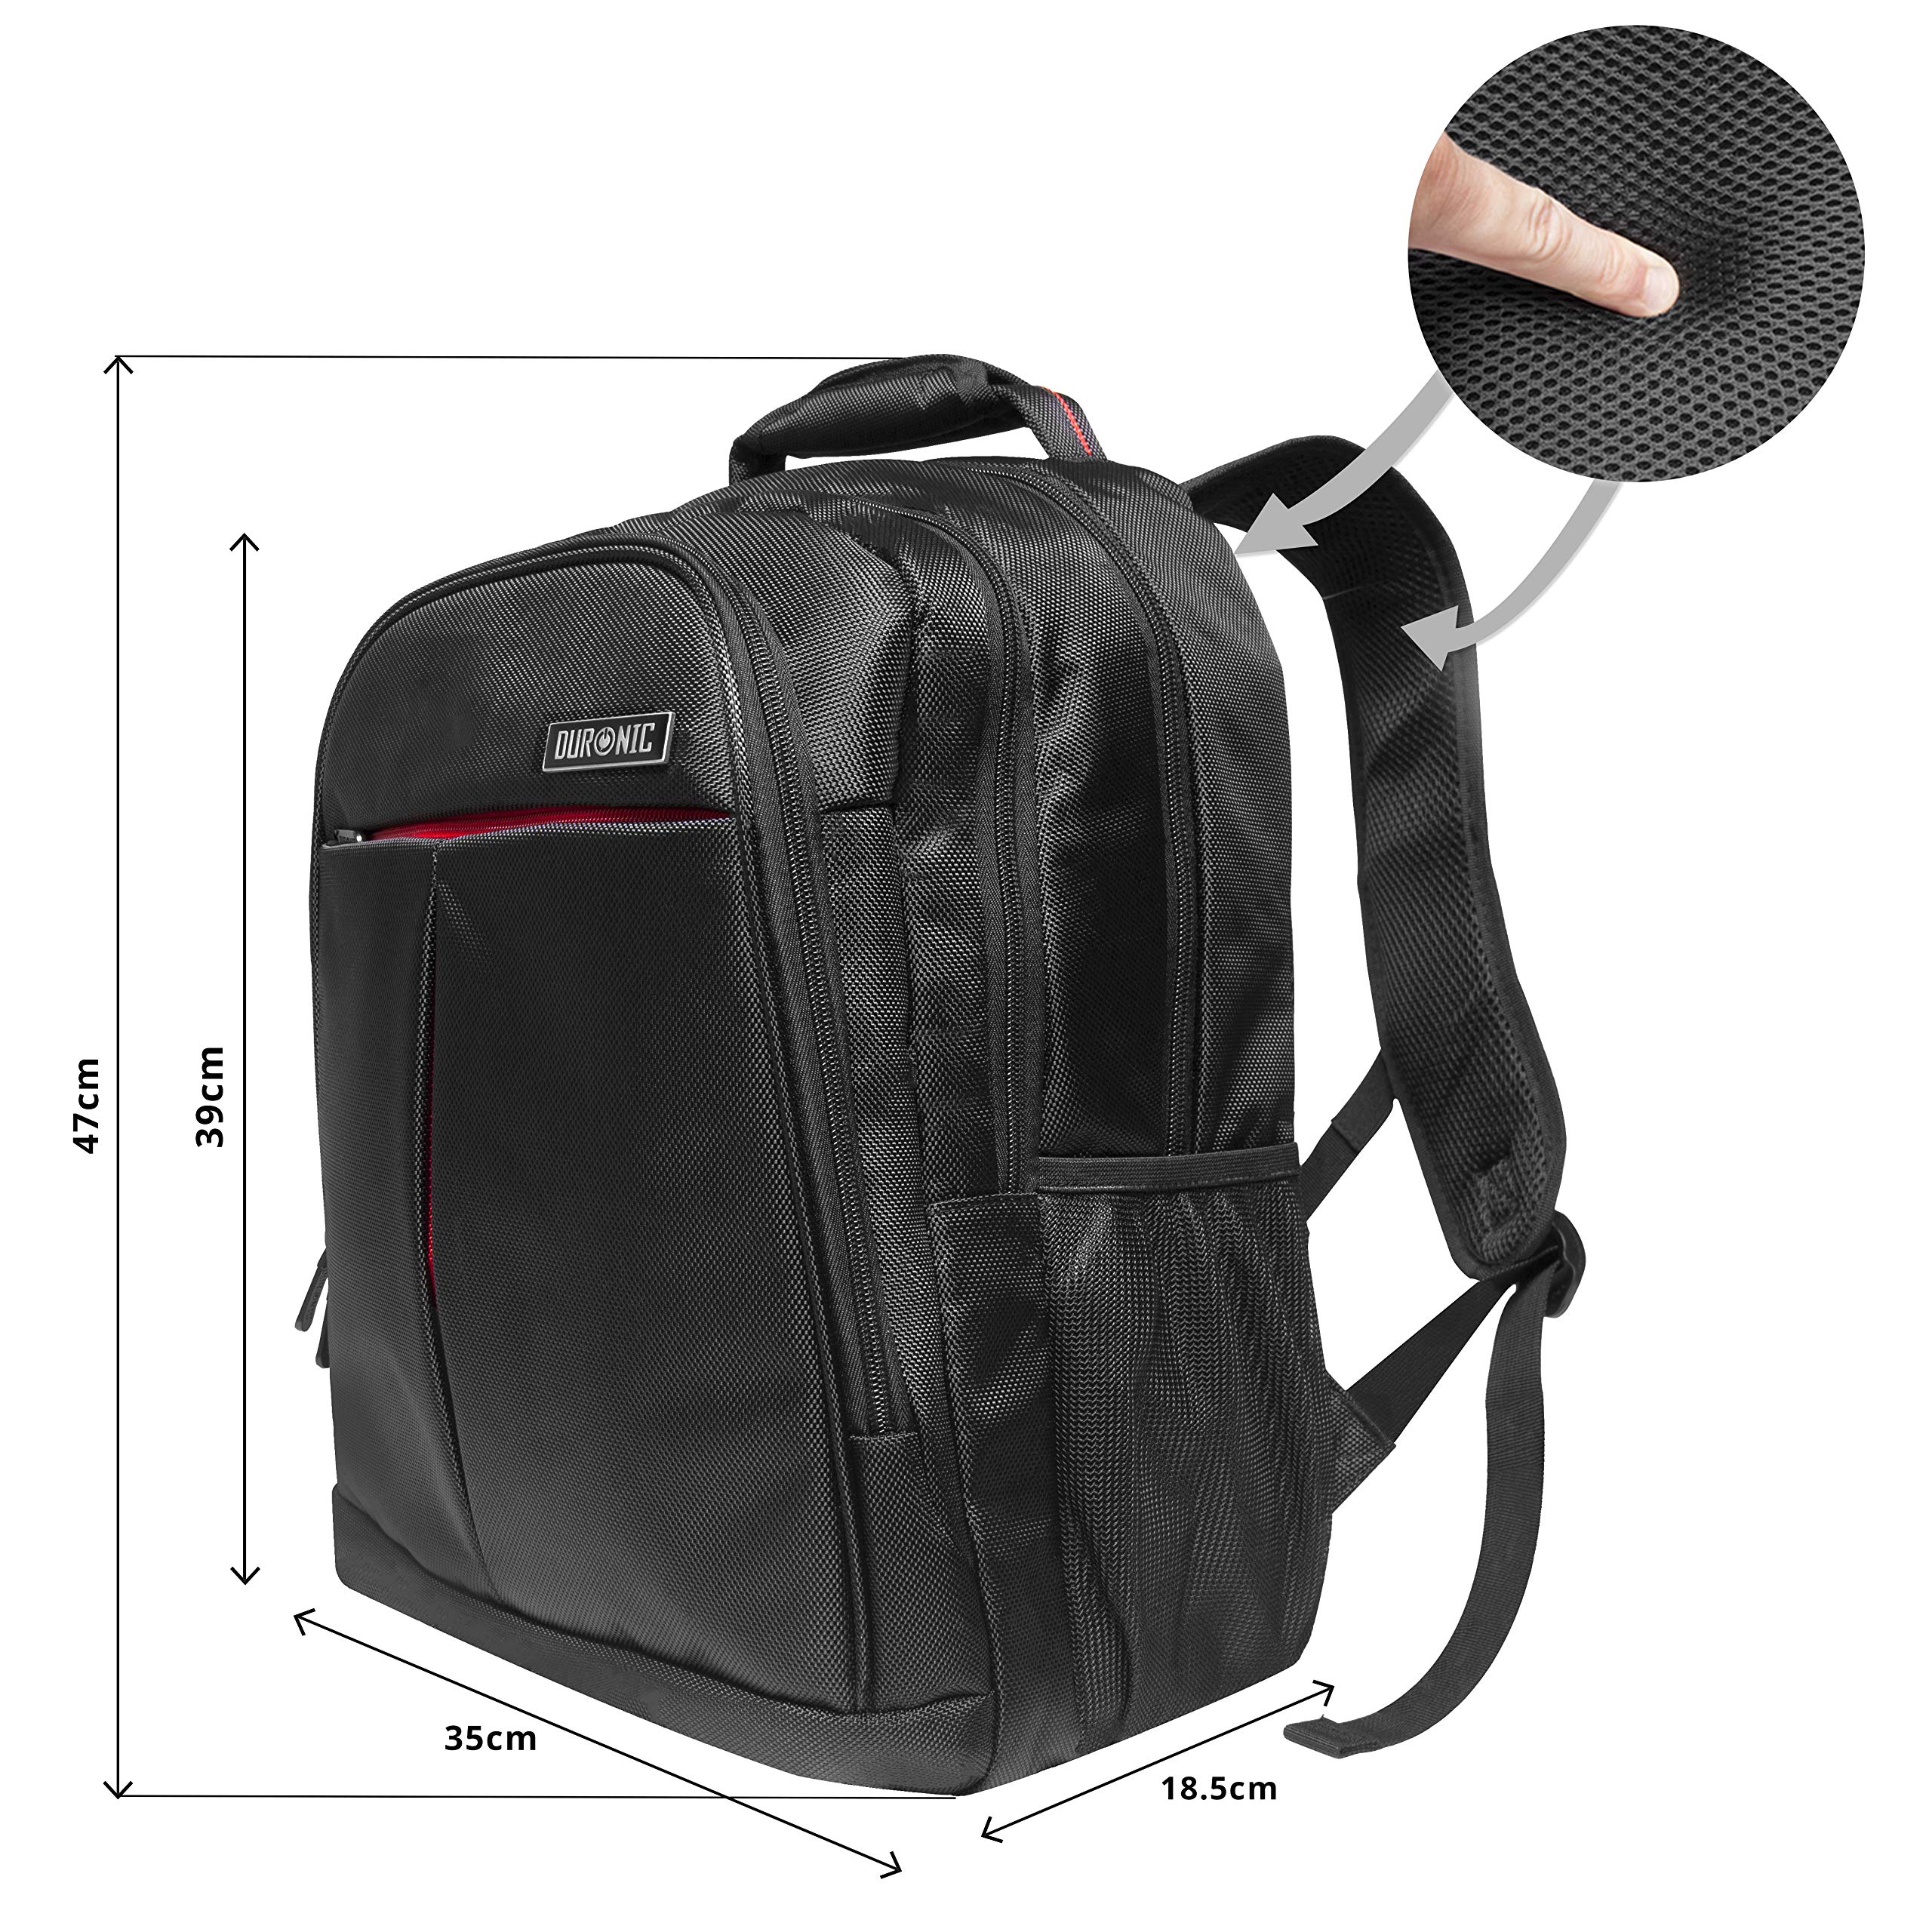 Duronic LB23 Laptop MacBook Backpack | Business Rucksack | Travel Bag | University | College |School | 13.3